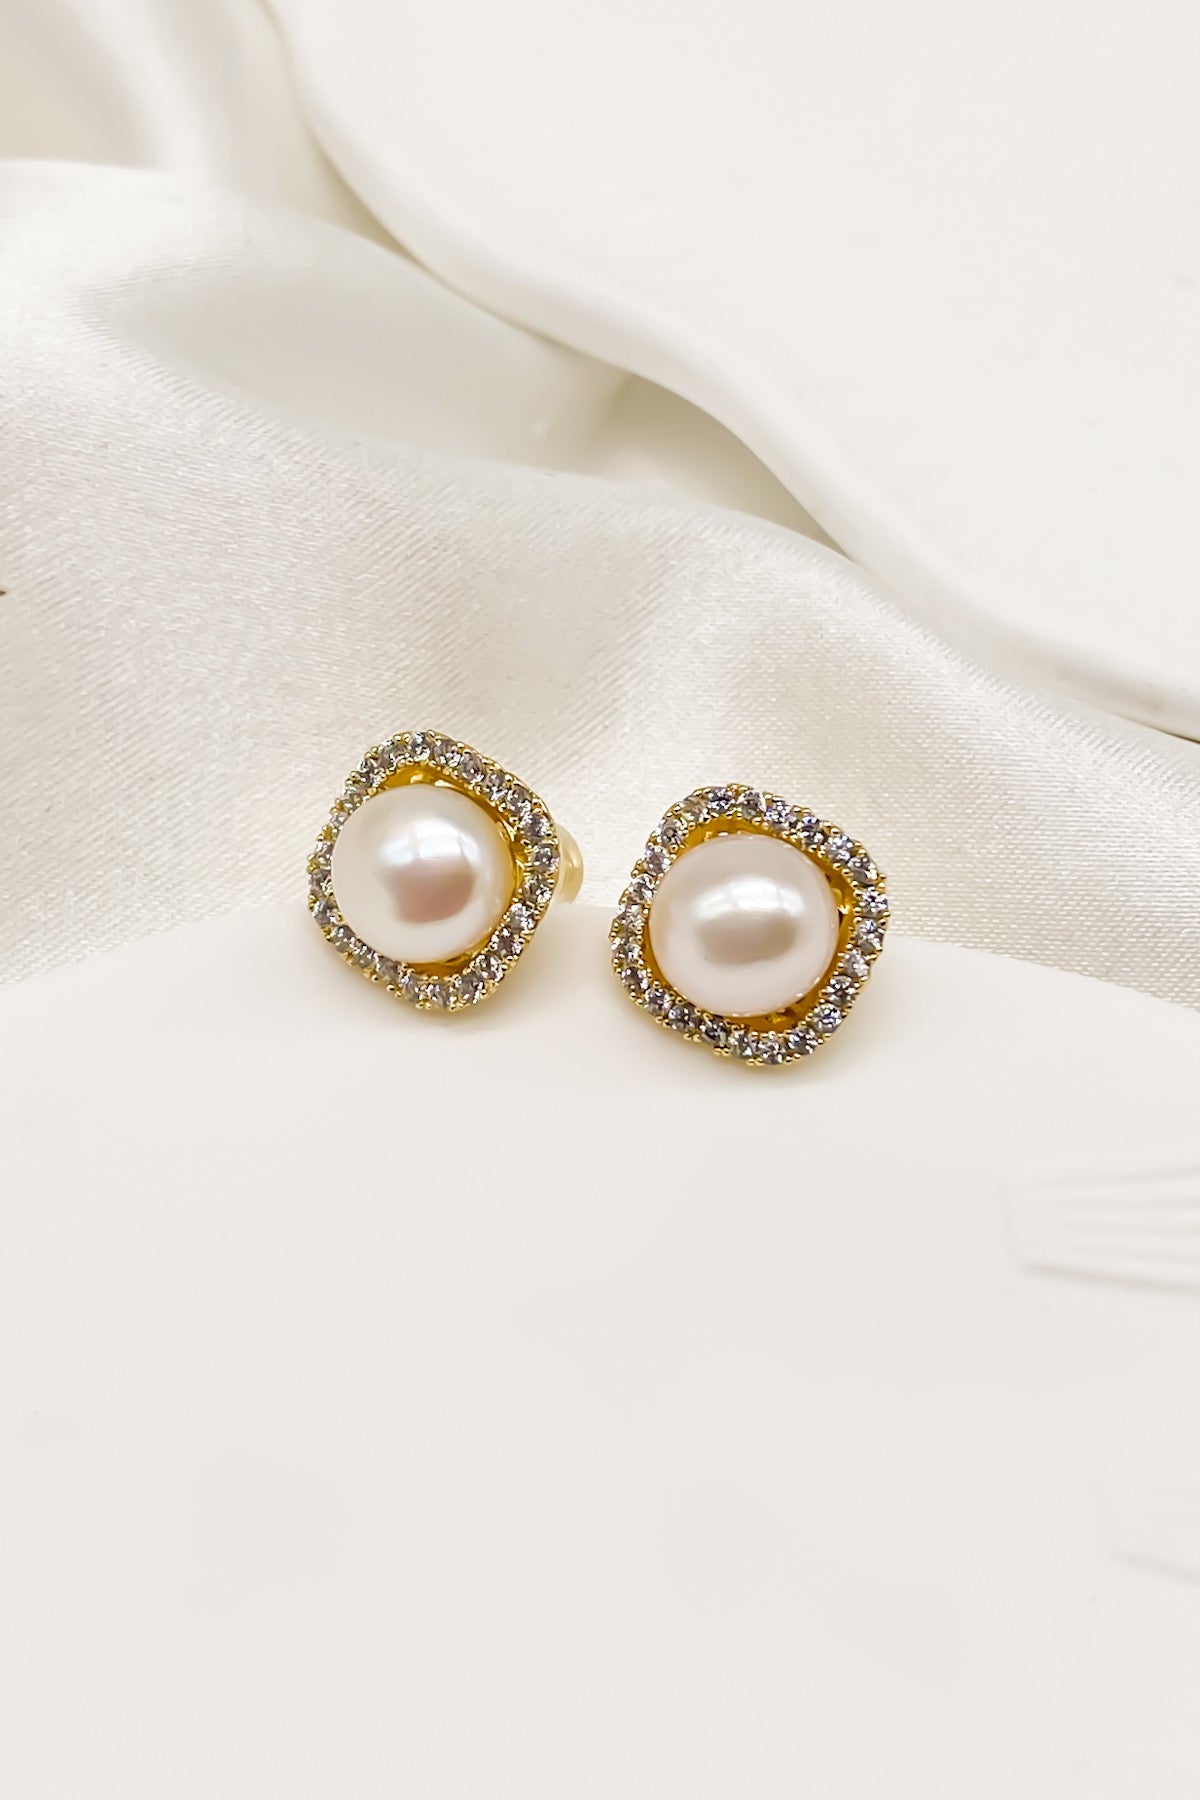 SKYE Shop Chic Modern Elegant Classy Women Jewelry French Parisian Minimalist Alexandra Freshwater Pearl Stud Earrings 10